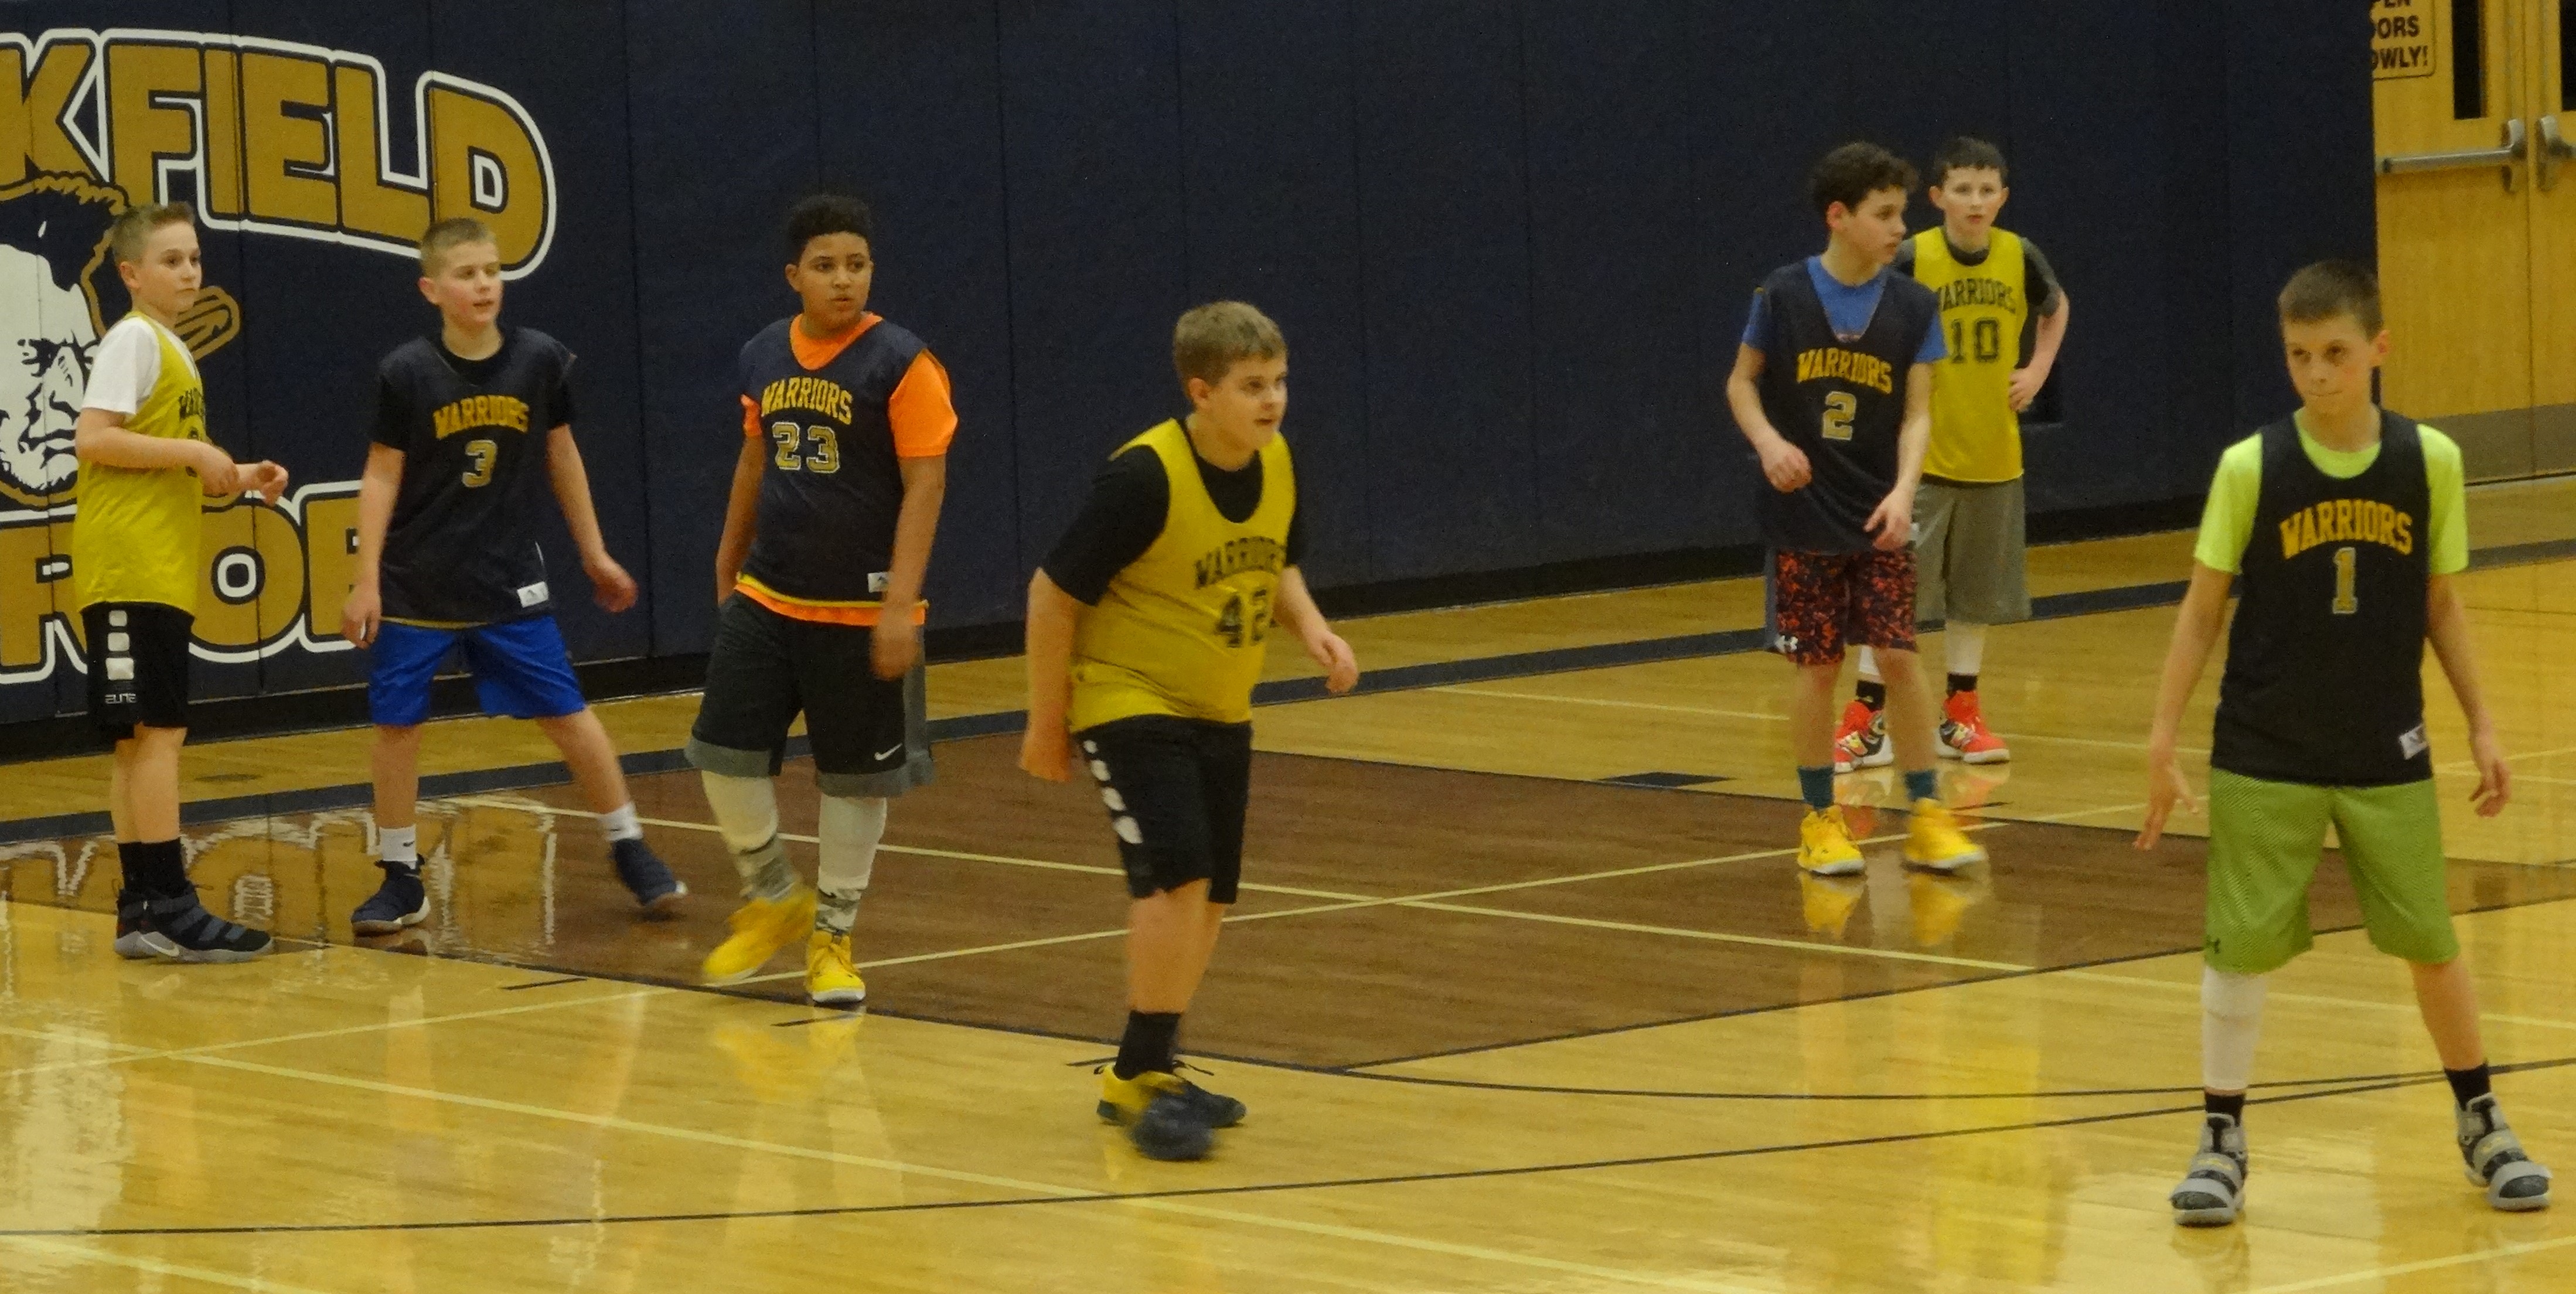 Members of the Brookfield sixth-grade basketball team include, from left, Dylan Means, Ian Reichart, Rahmel Craig, Evan Shingledecker, Matteo Fortuna, Ryan Atkinson and Ashton O'Brien.